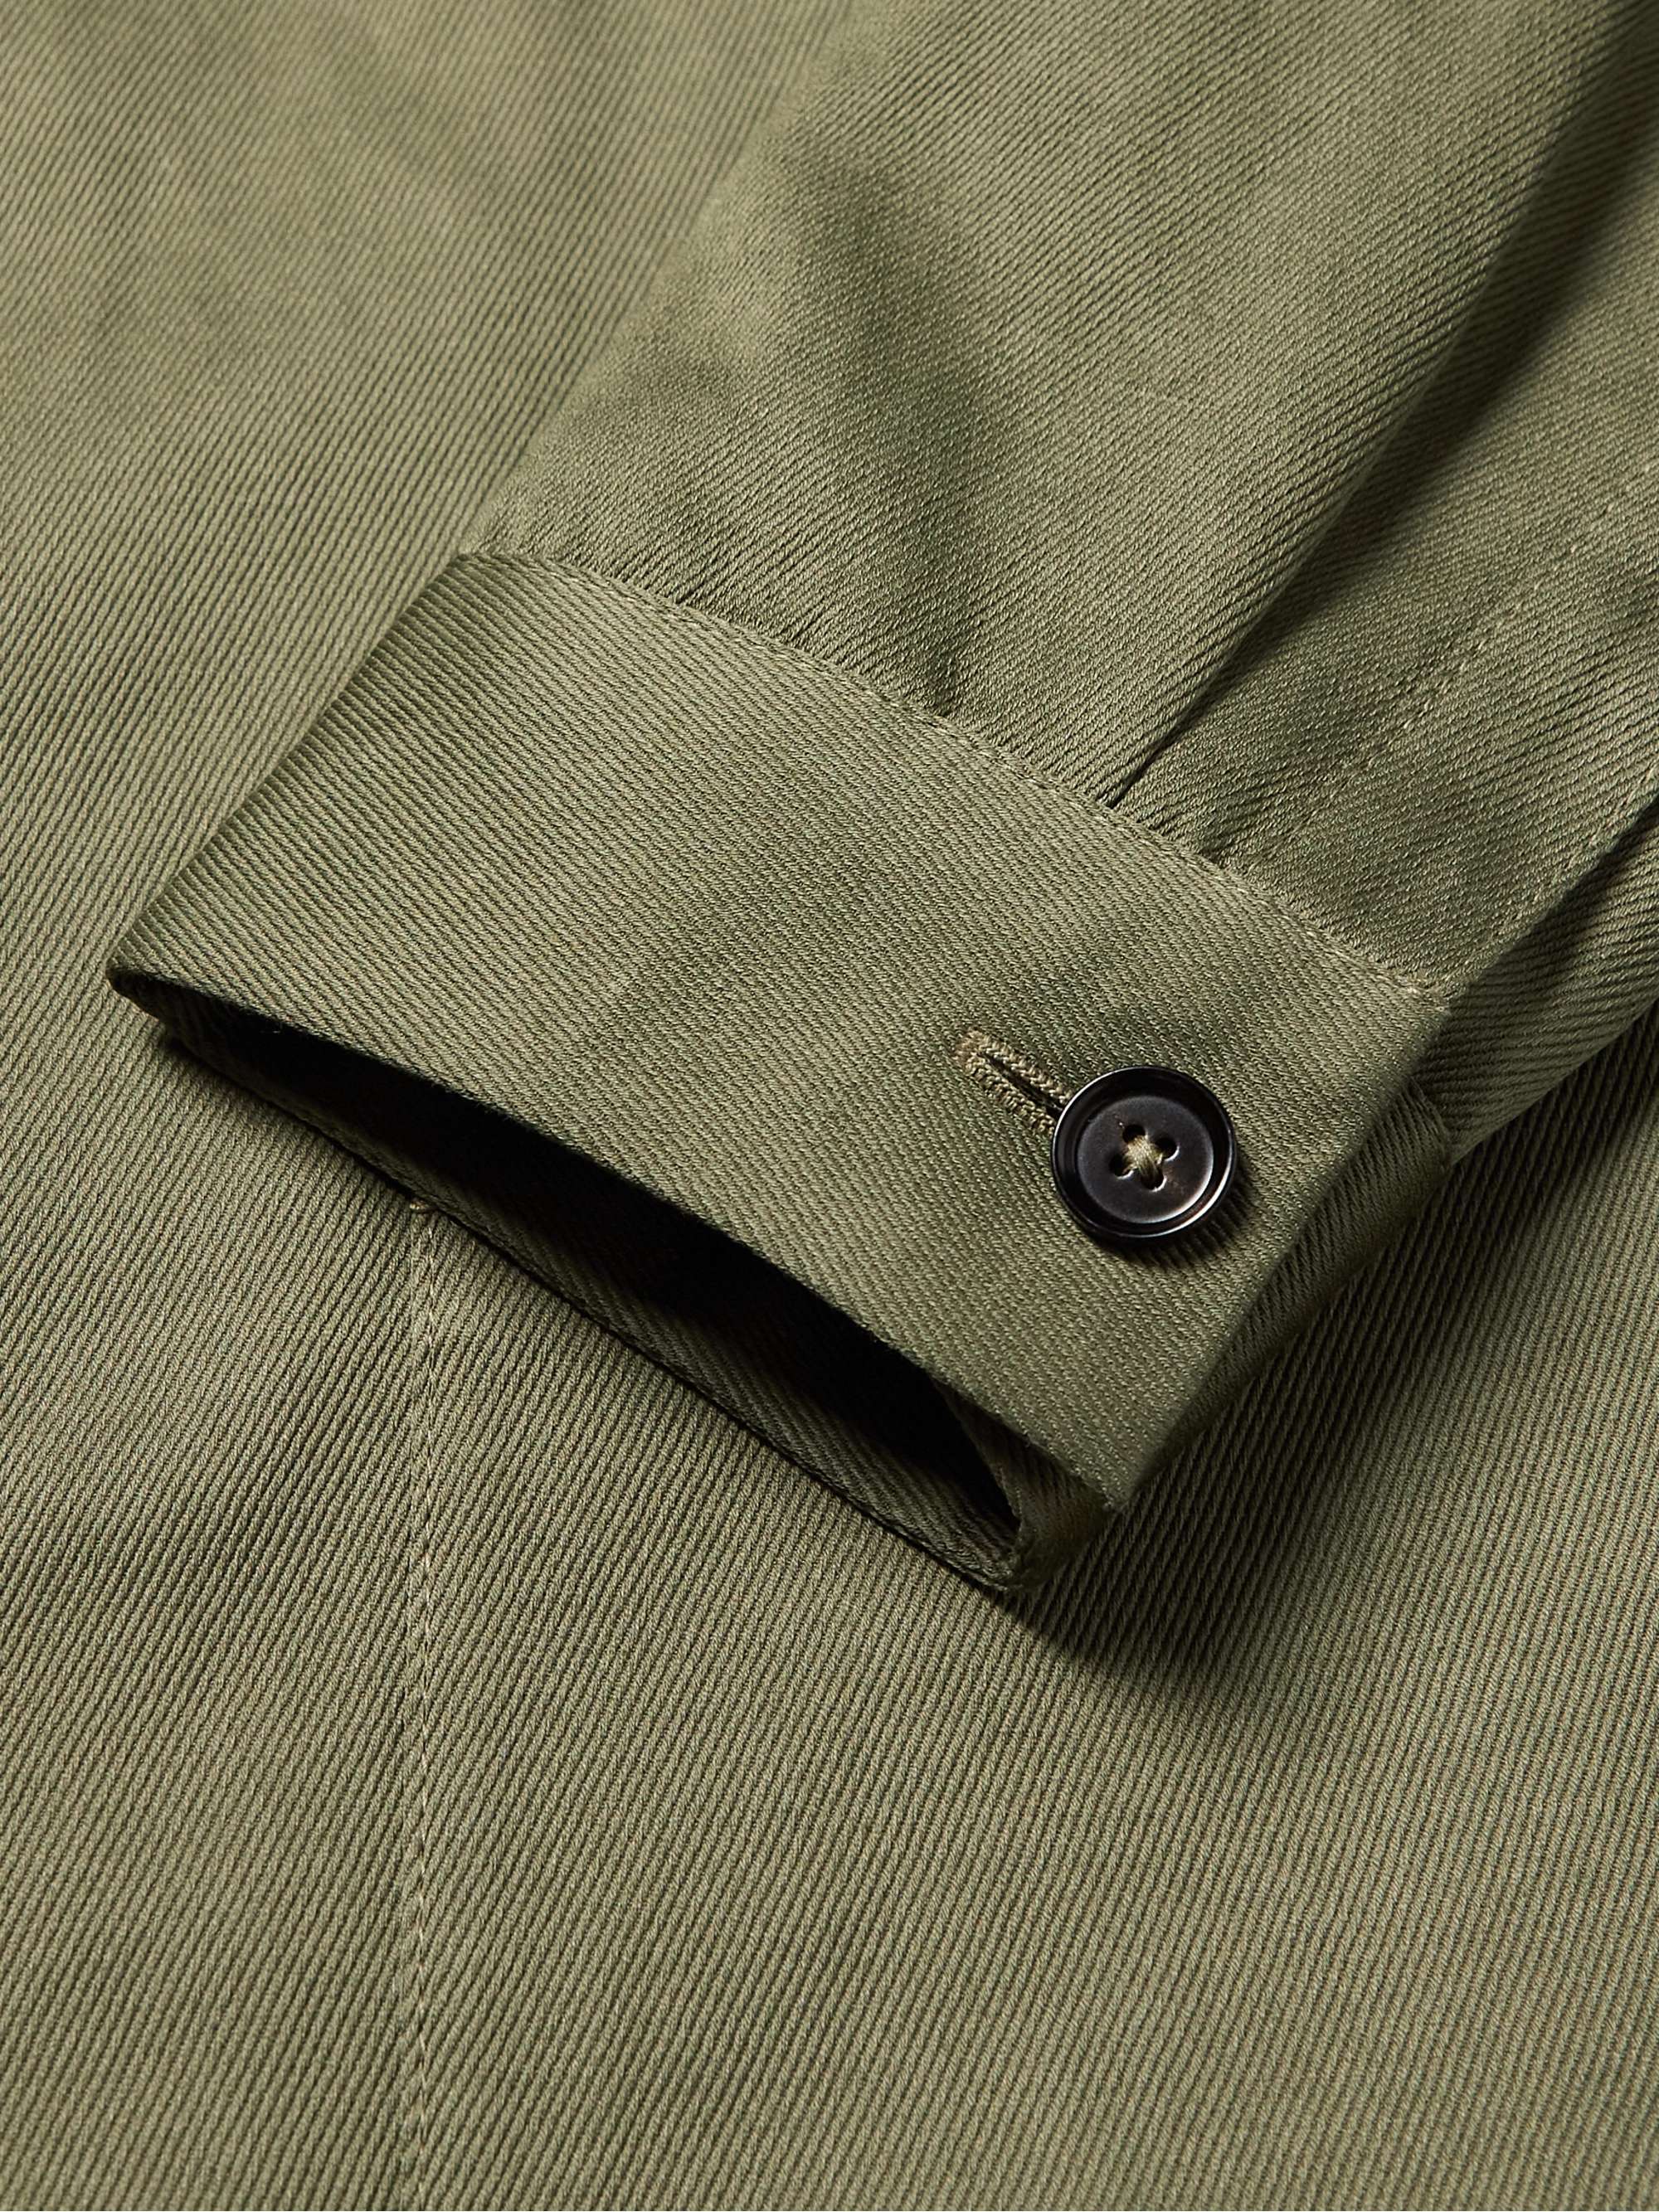 ZEGNA Cotton and Hemp-Blend Gabardine Chore Jacket